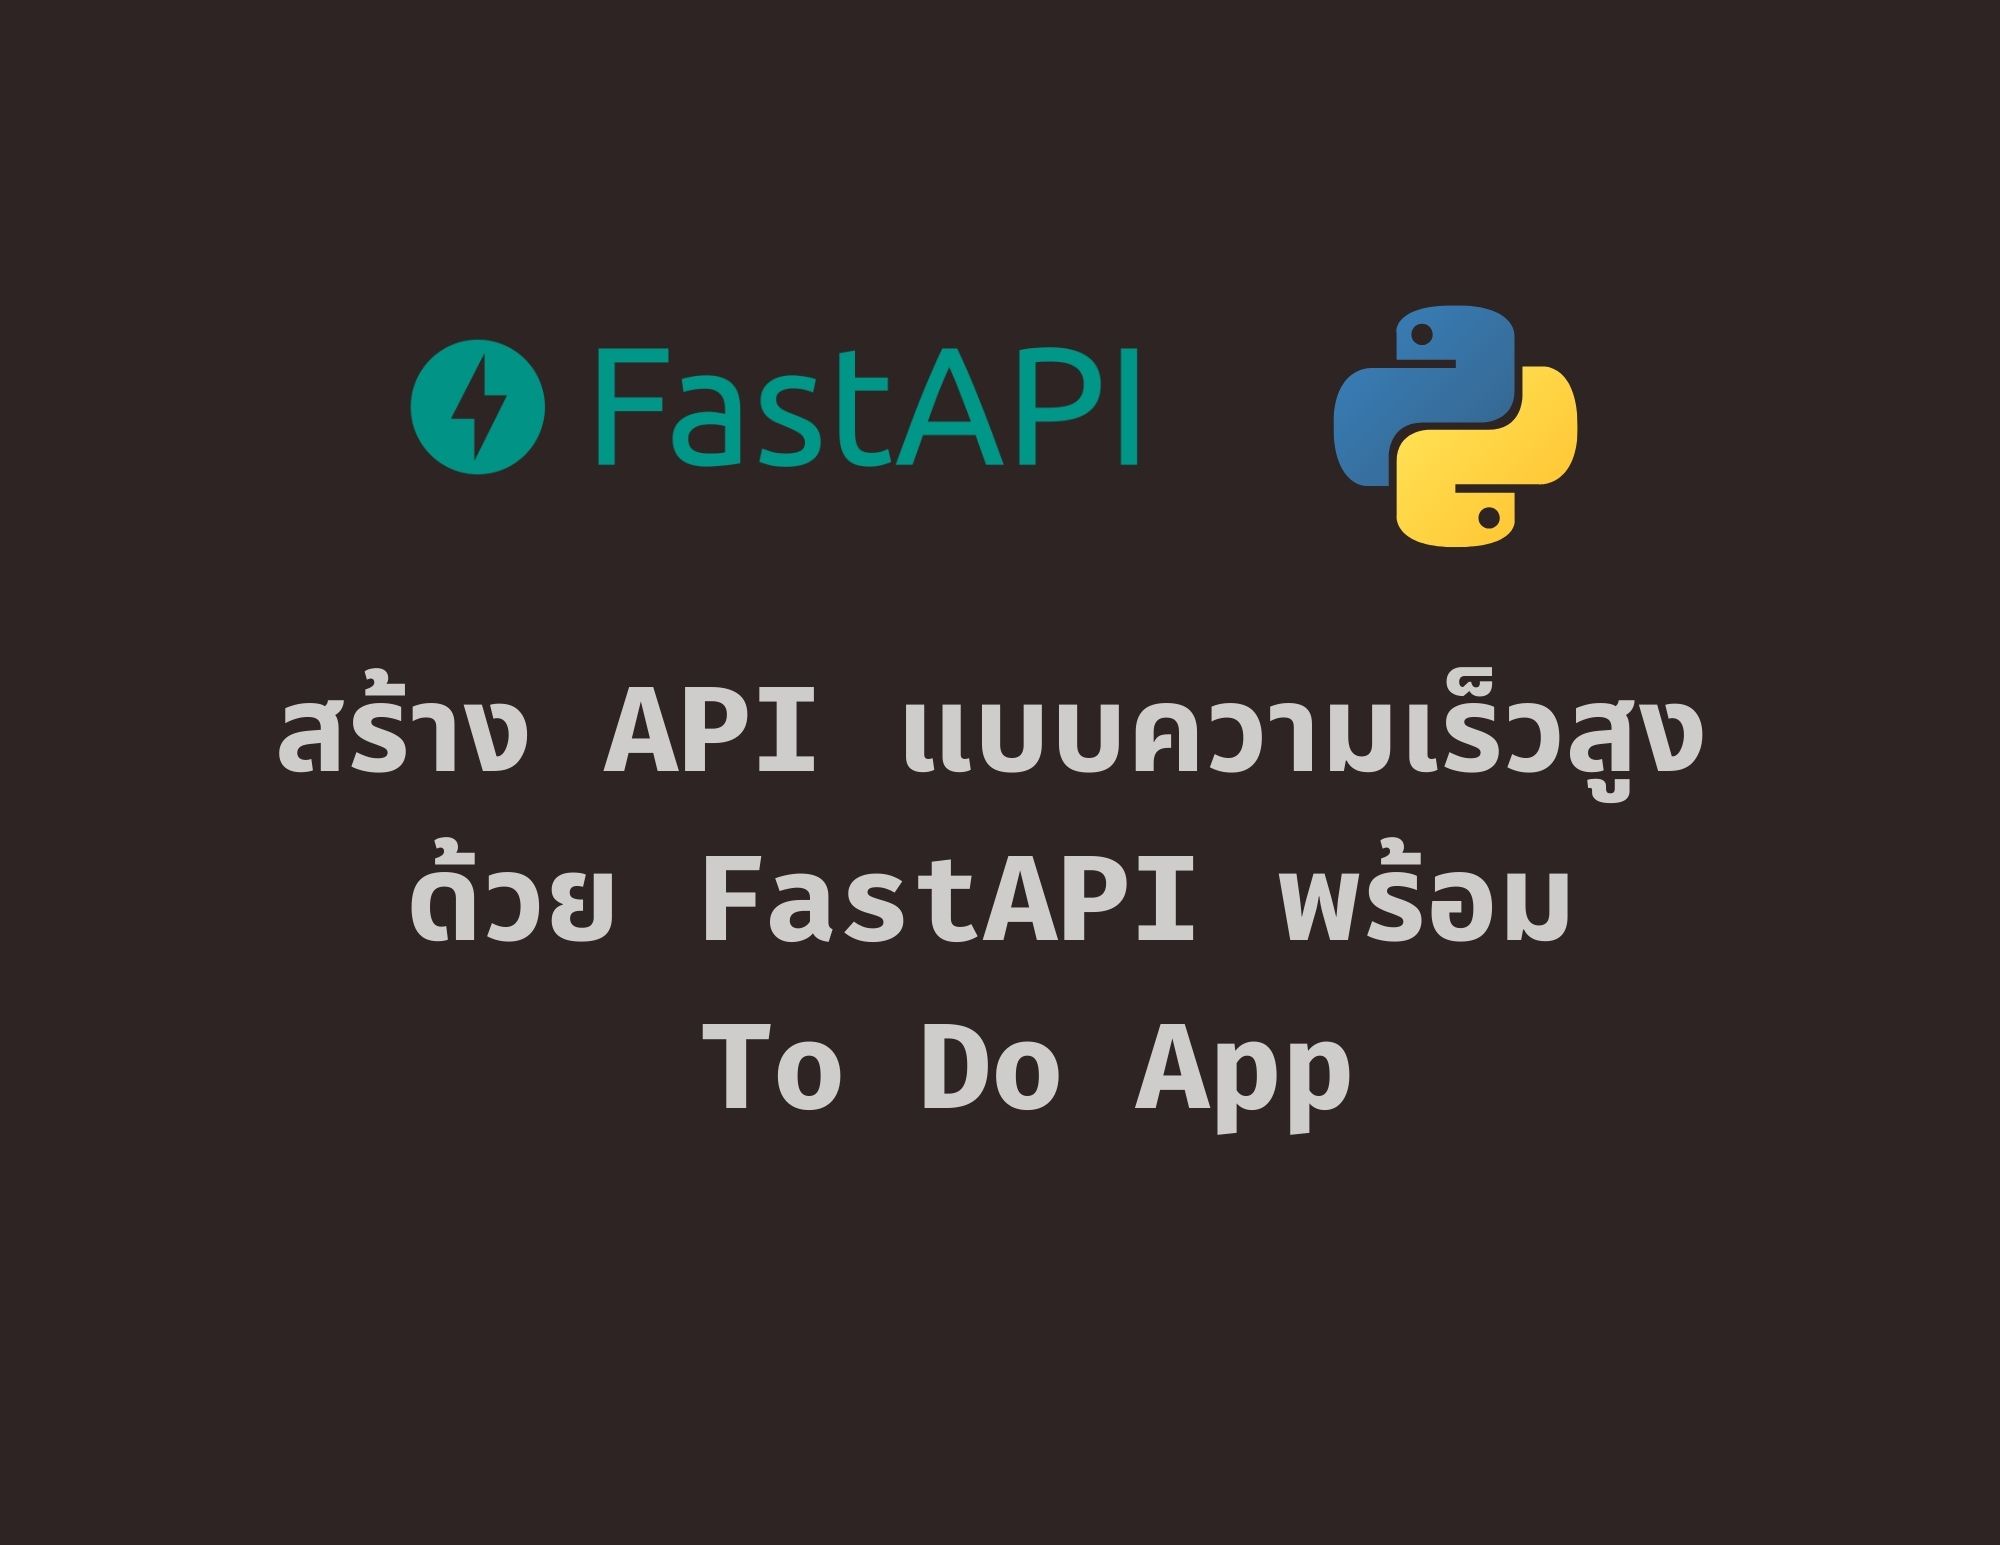 FastAPI ทำ To Do app